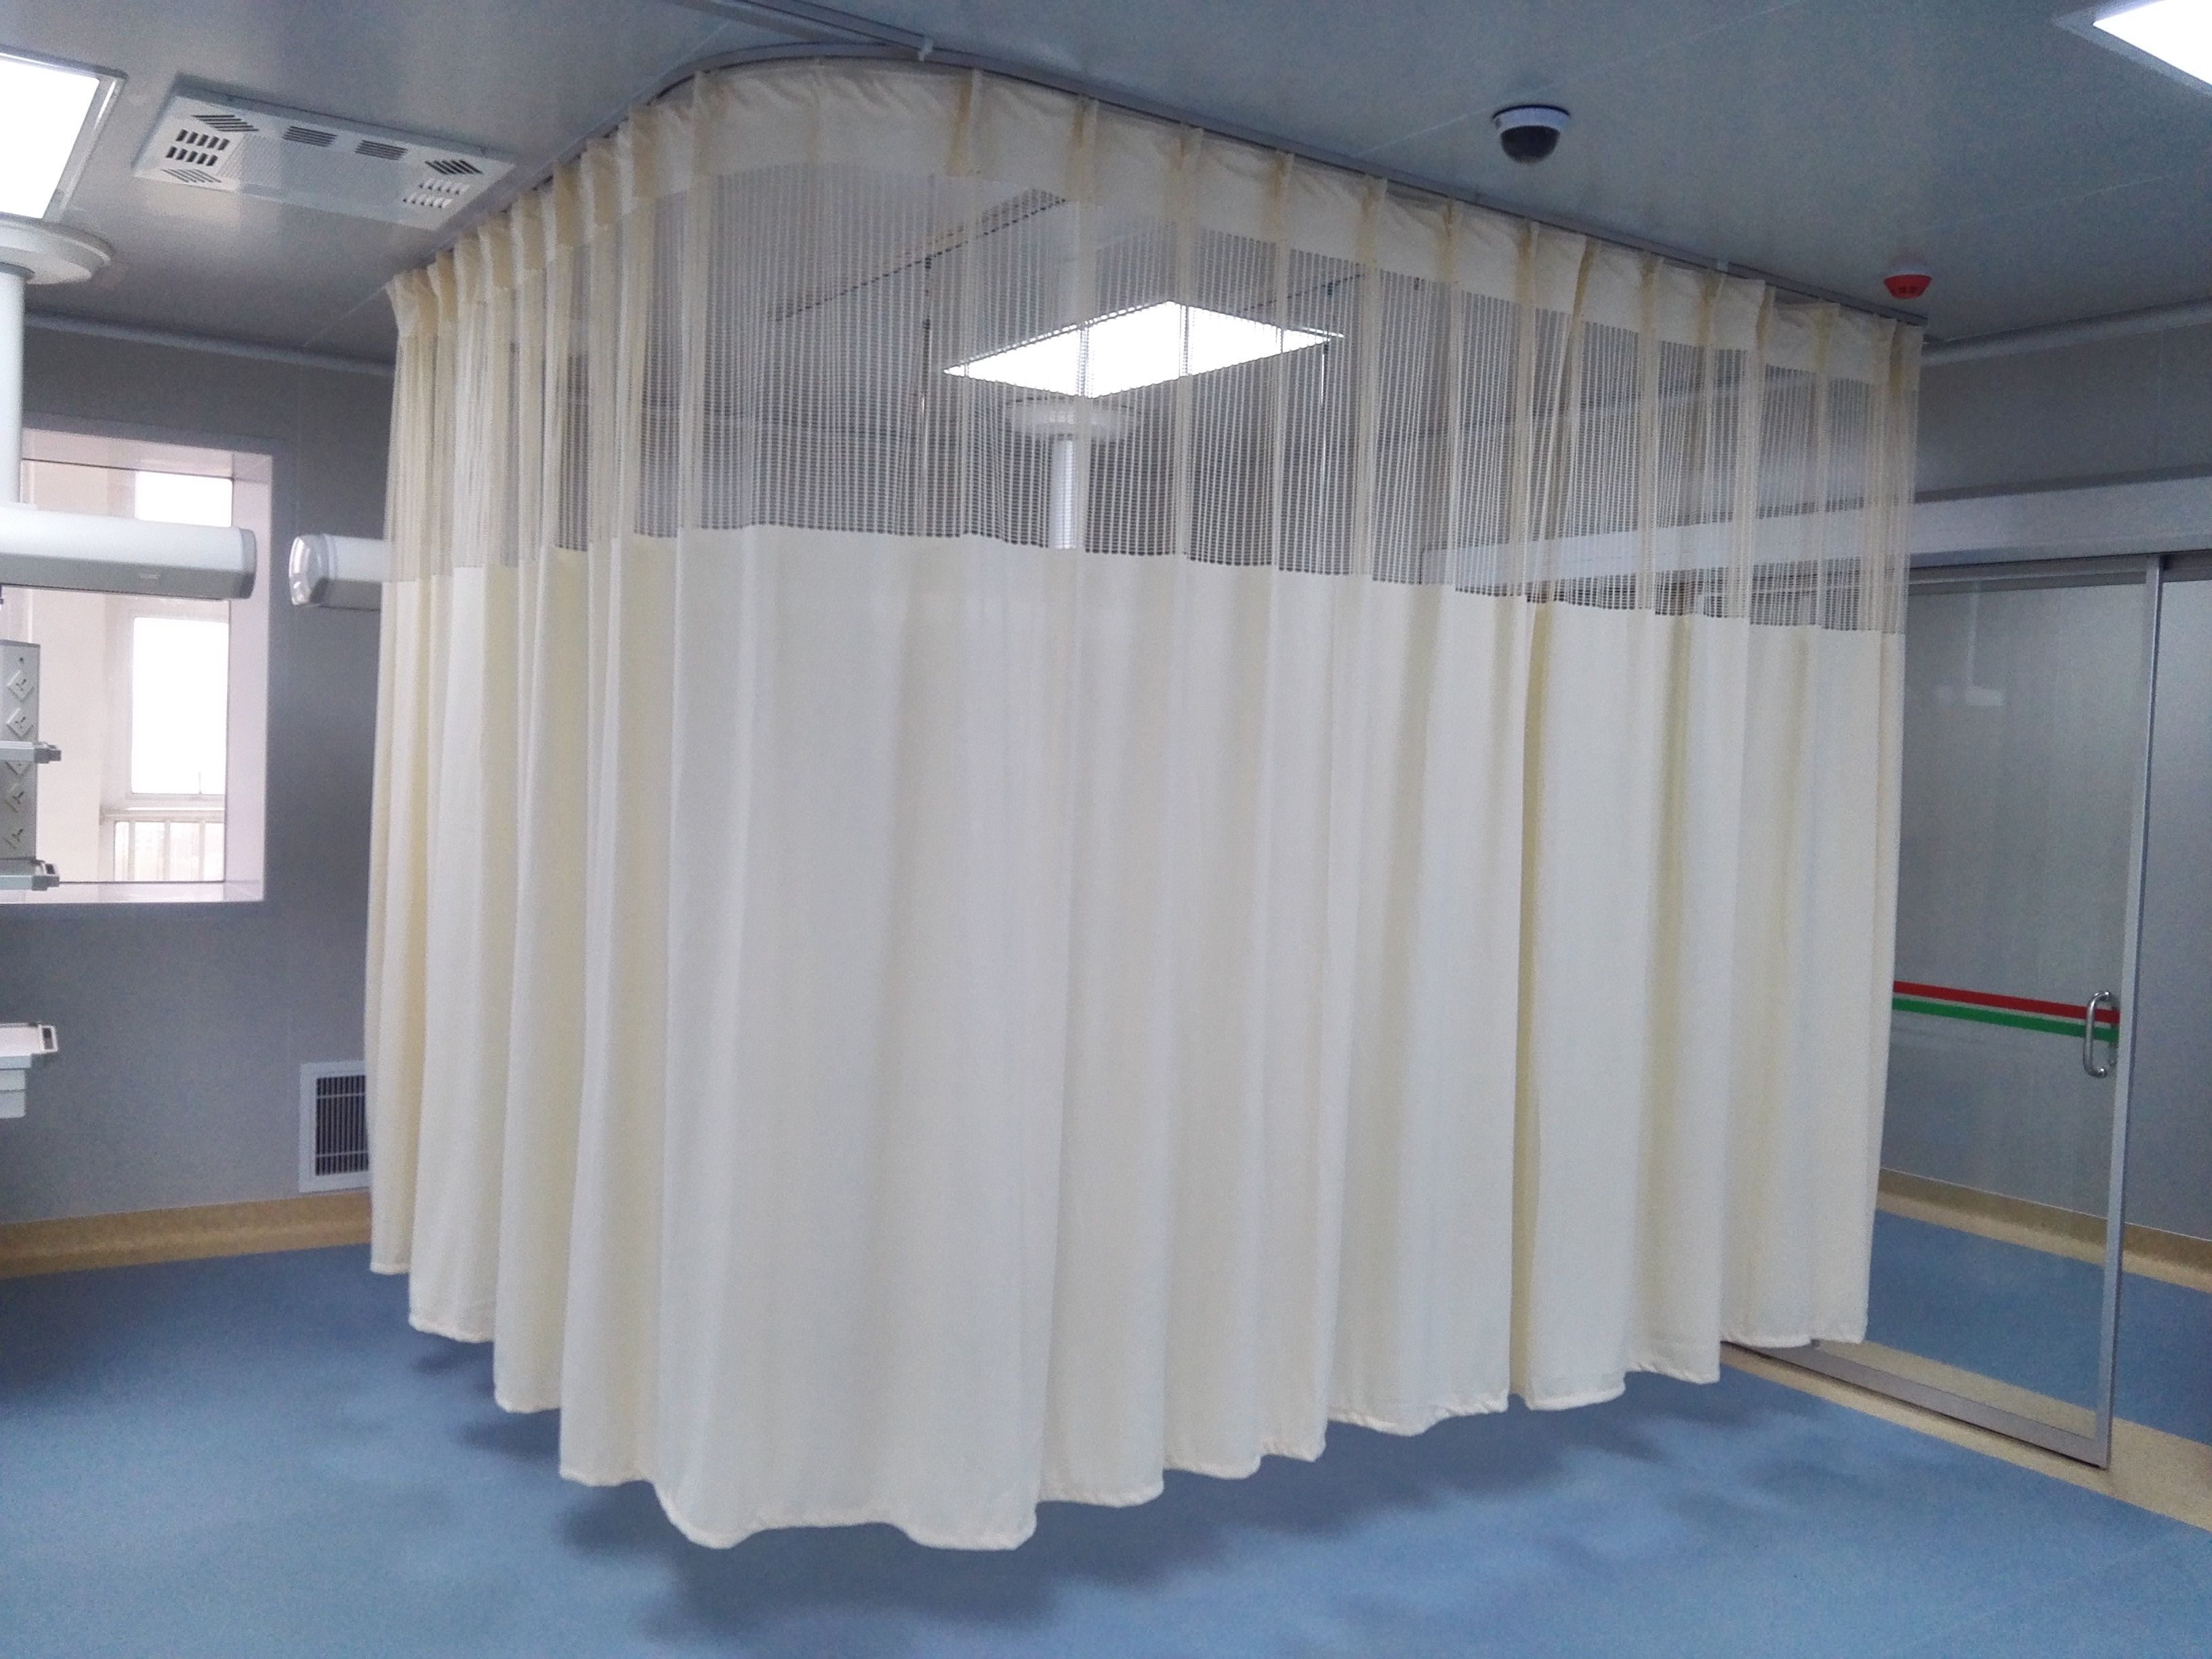 Medical curtain fabric